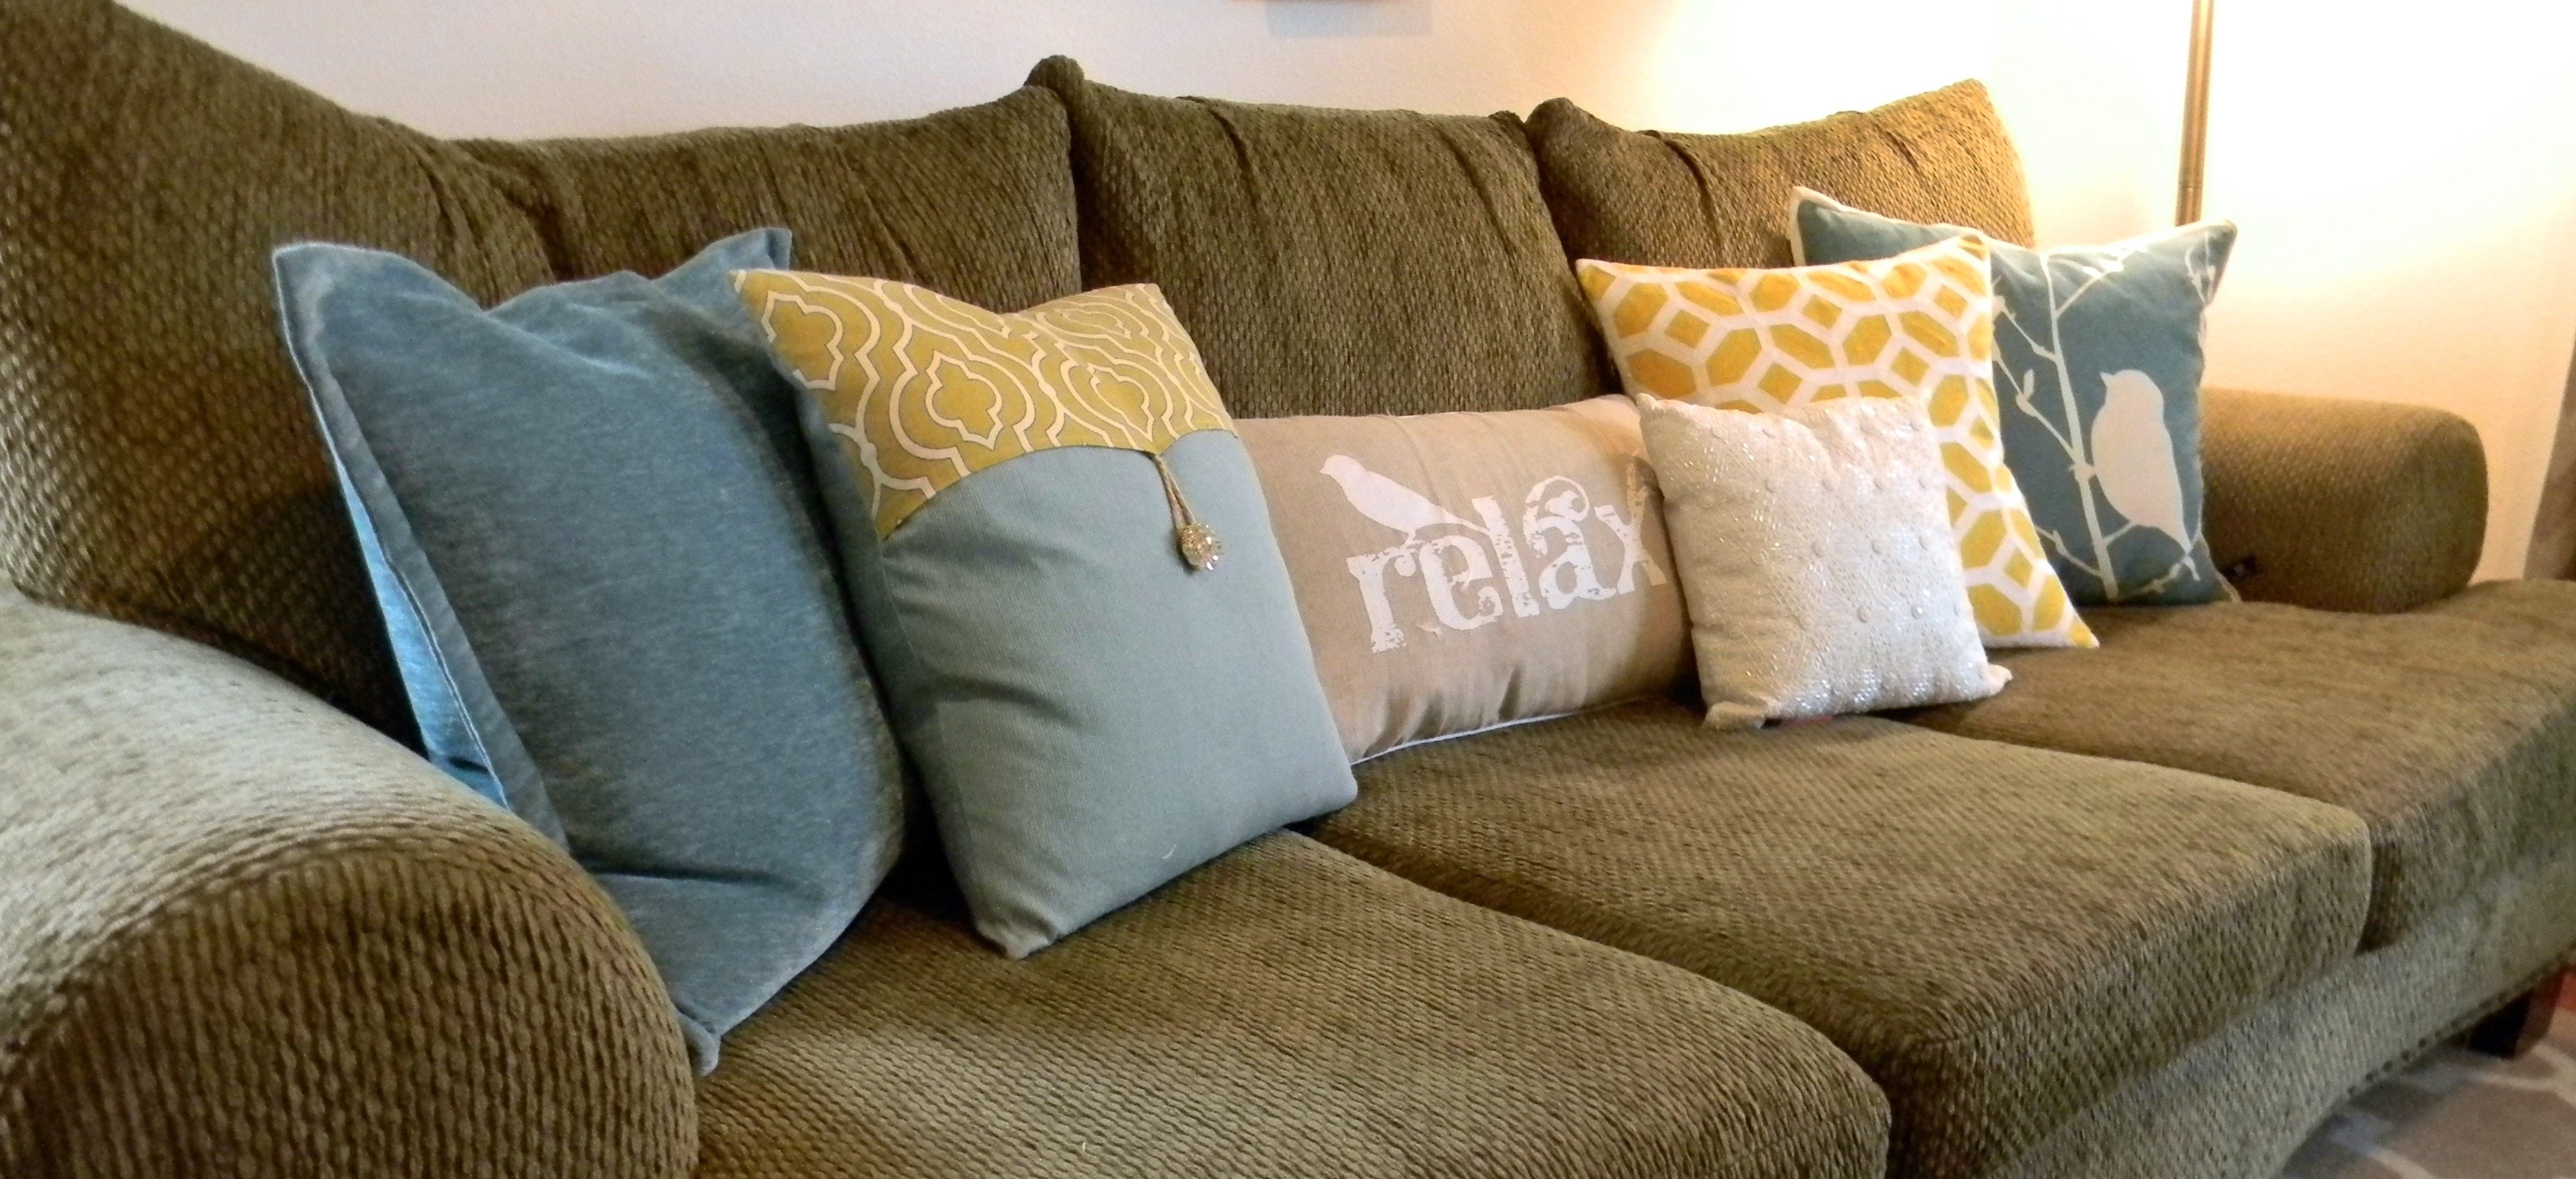 Decorative Pillows Ideas Make A Photo Gallery Photo Of Throw Pillows 